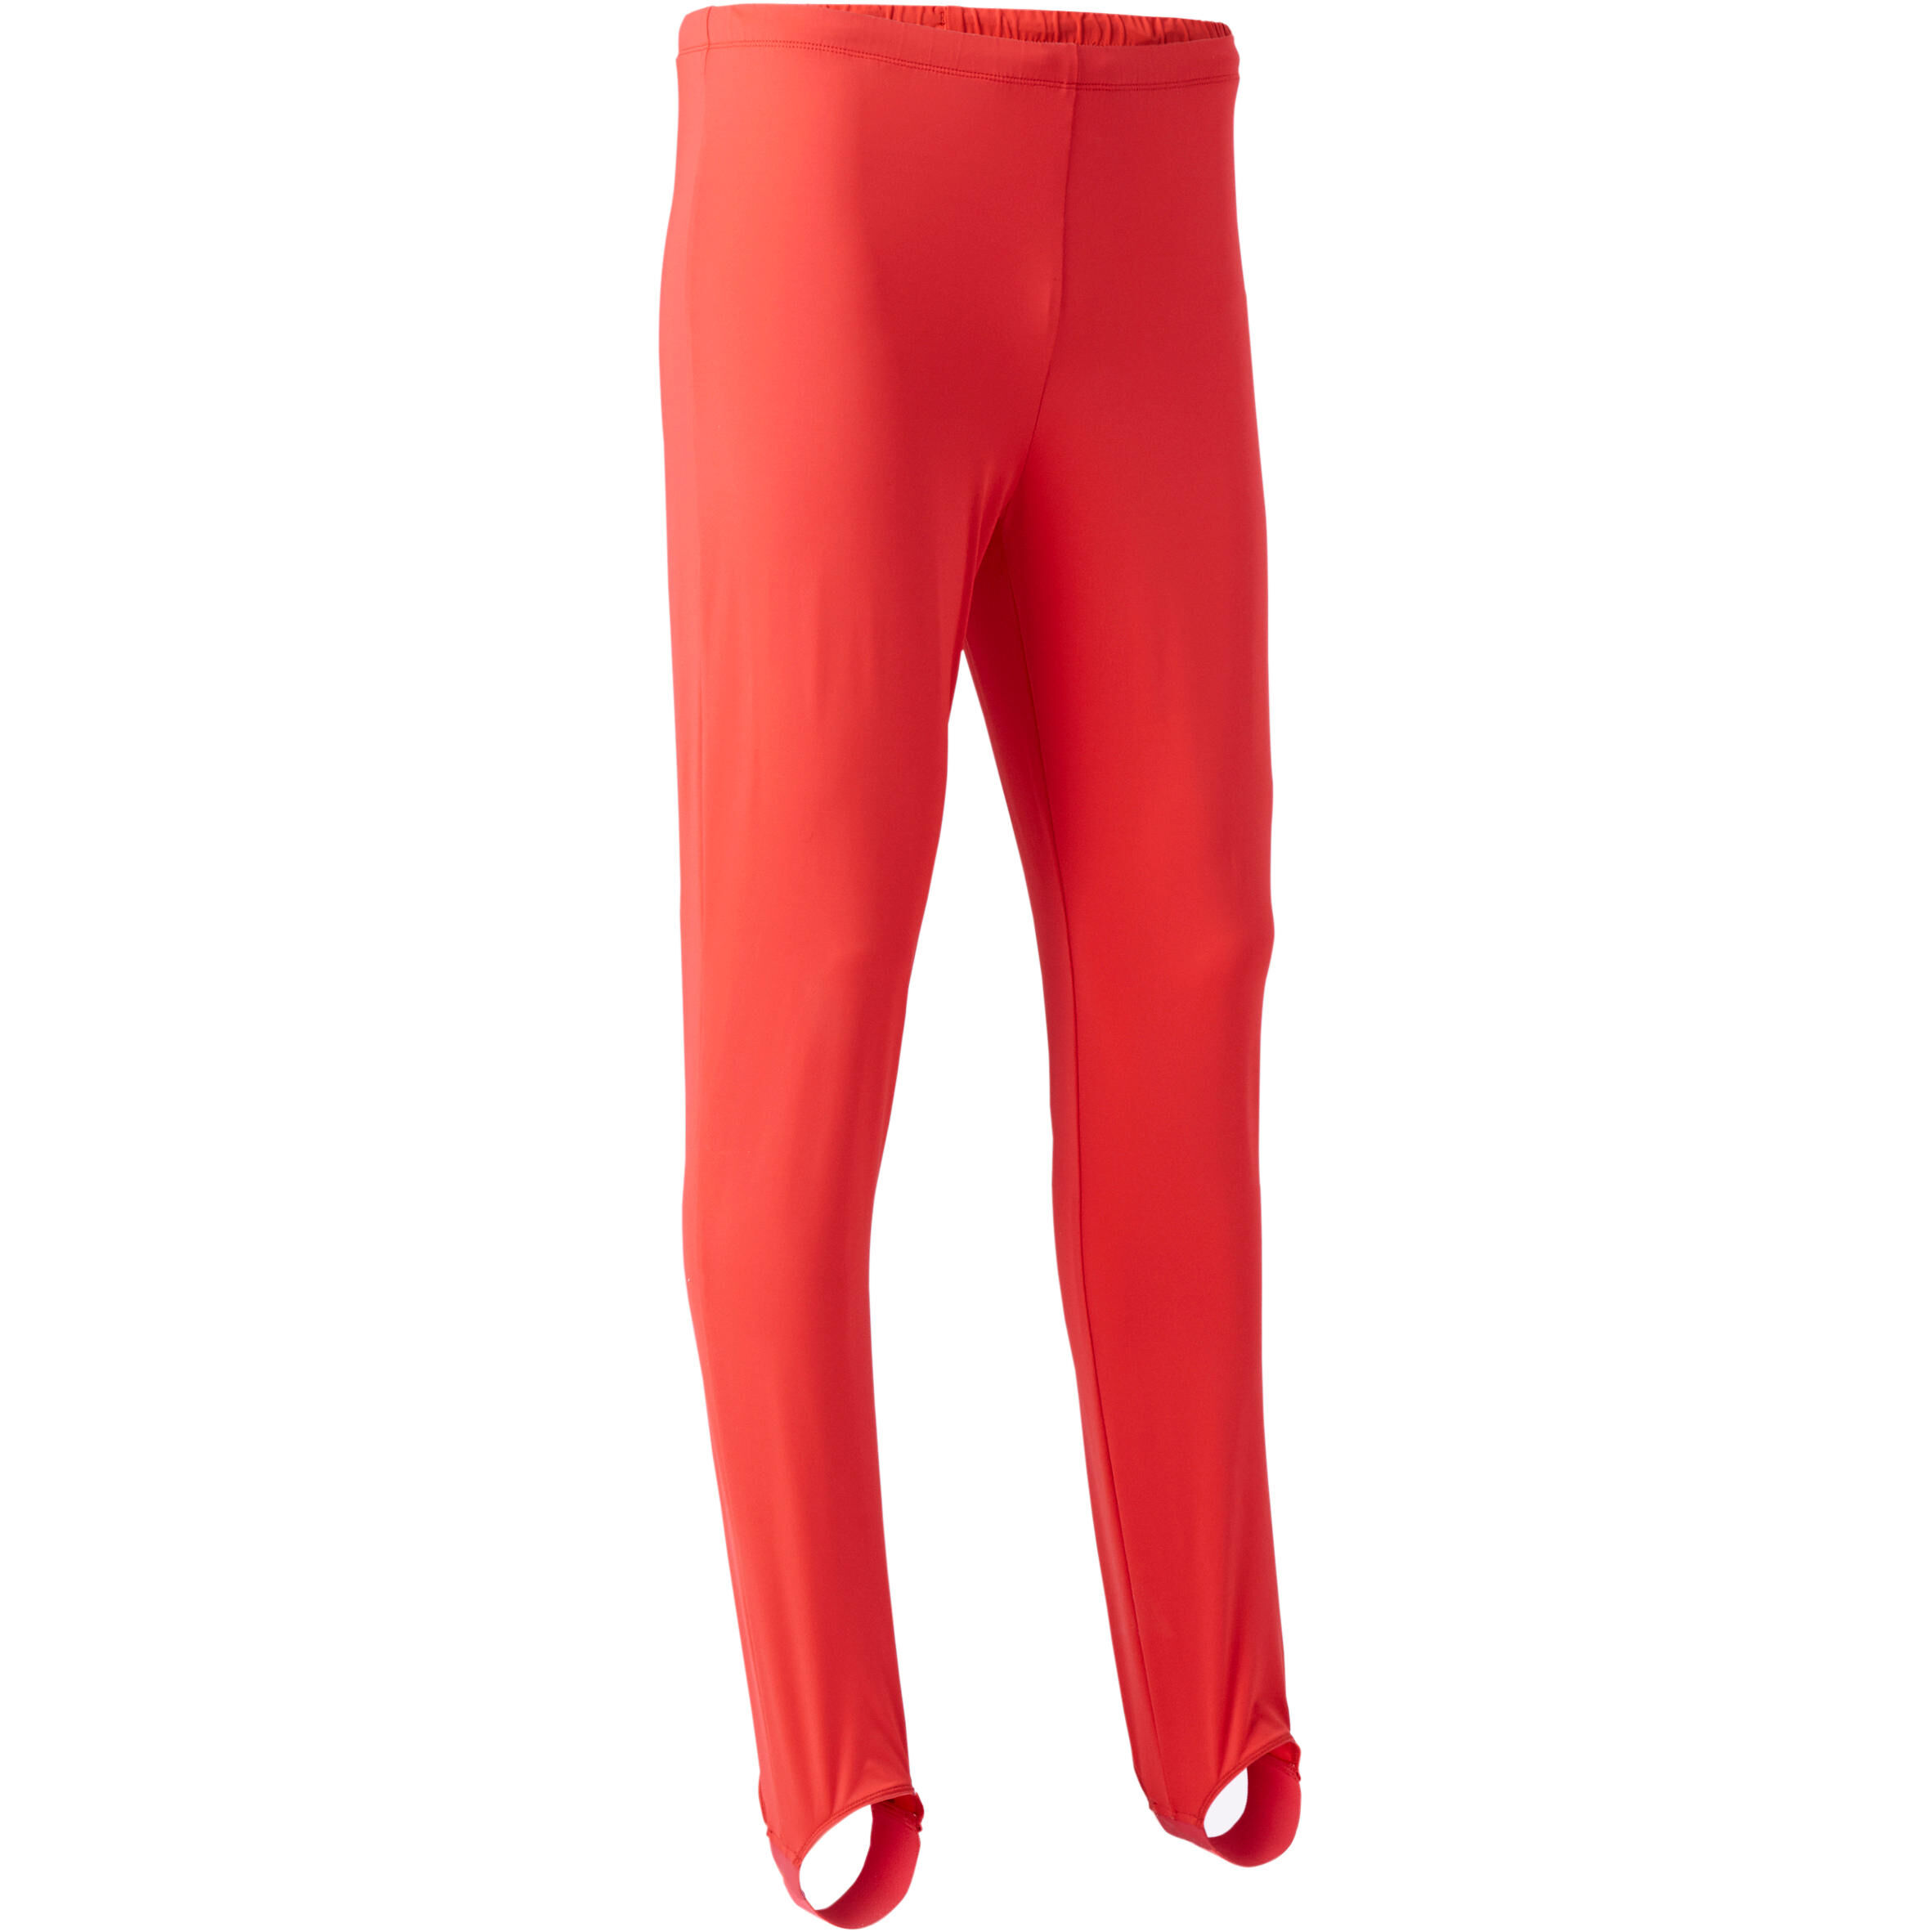 DOMYOS Boys' Gymnastics Stirrup Pants - Red